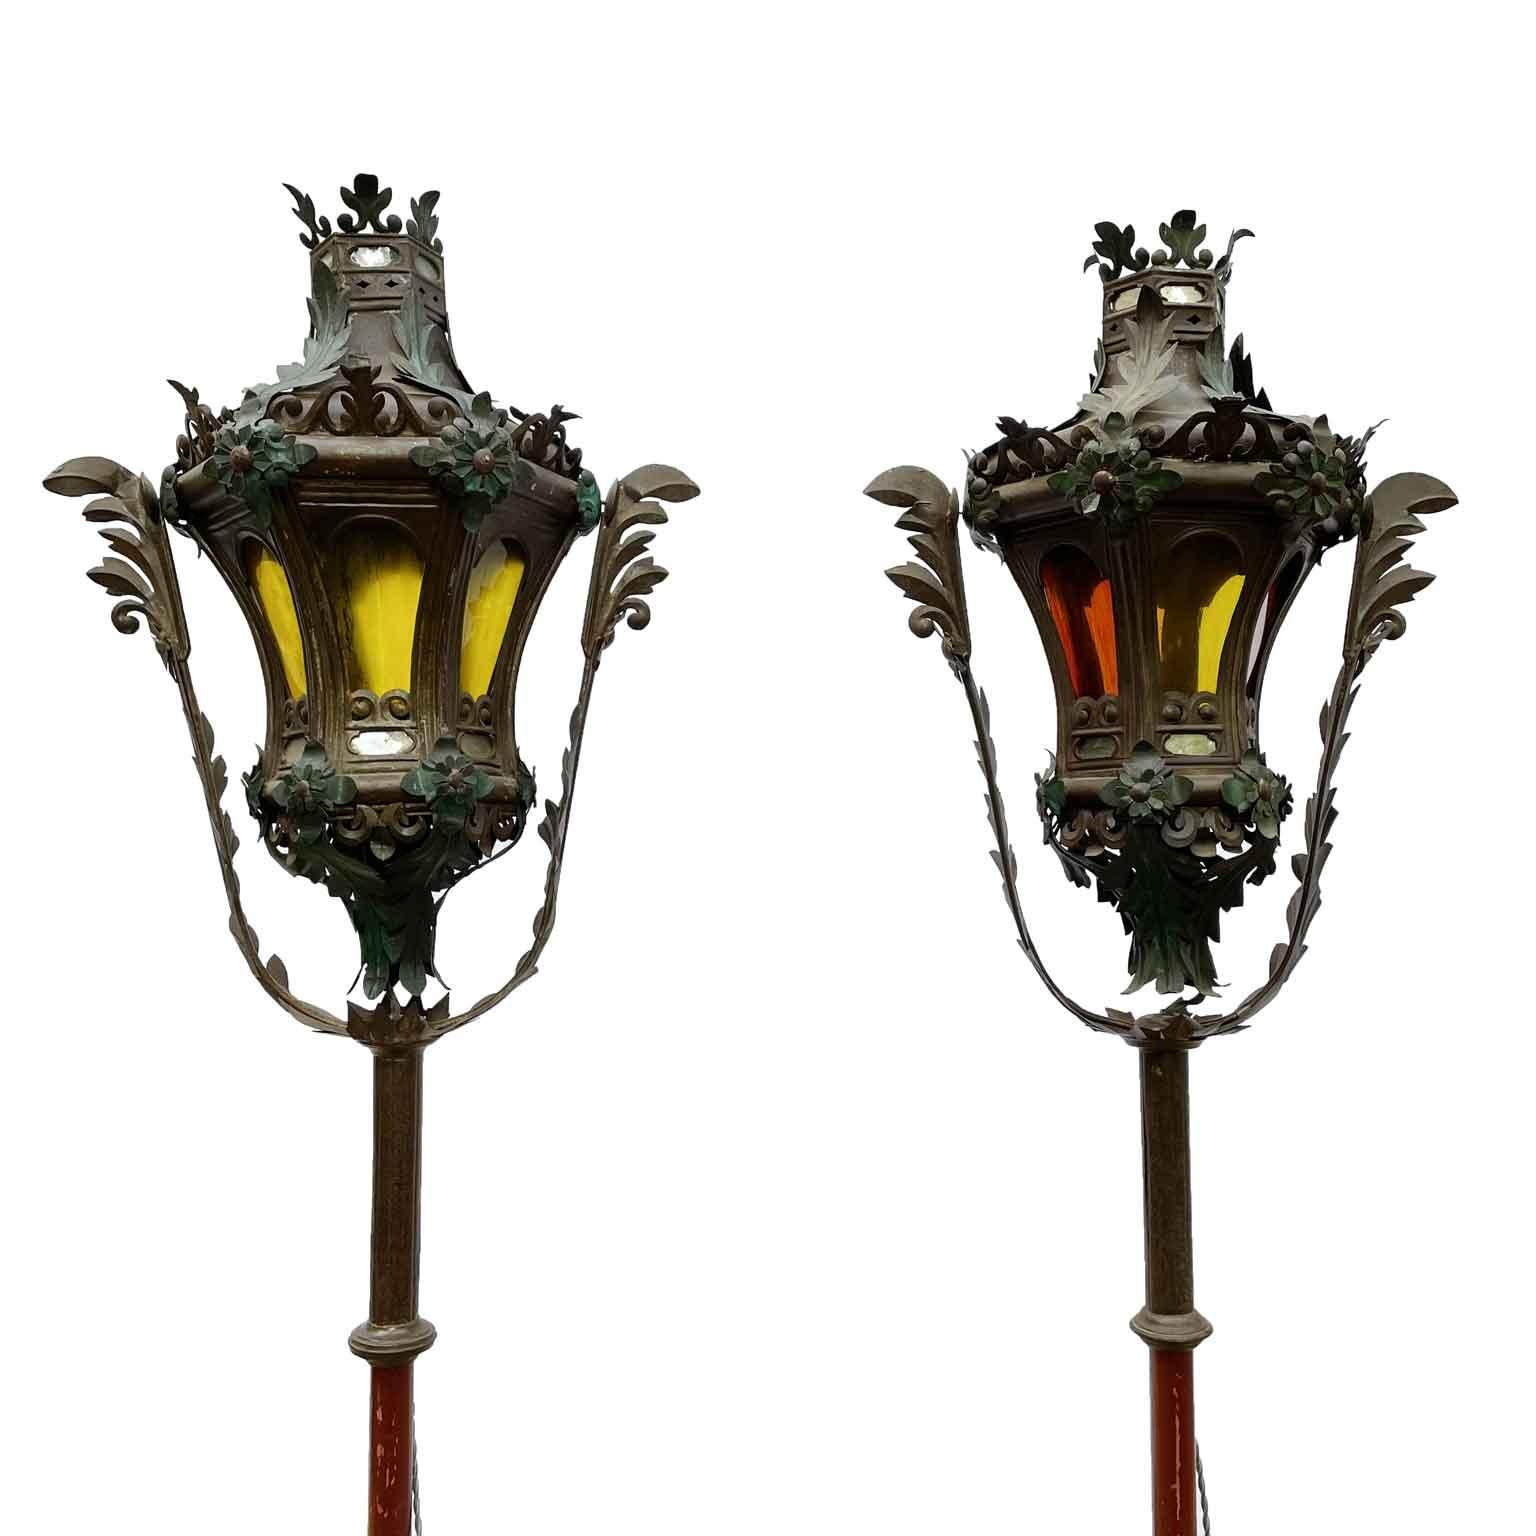 Pair of Venetian Lanterns 19th Century Italian Gondola Lamps Baroque Style 13